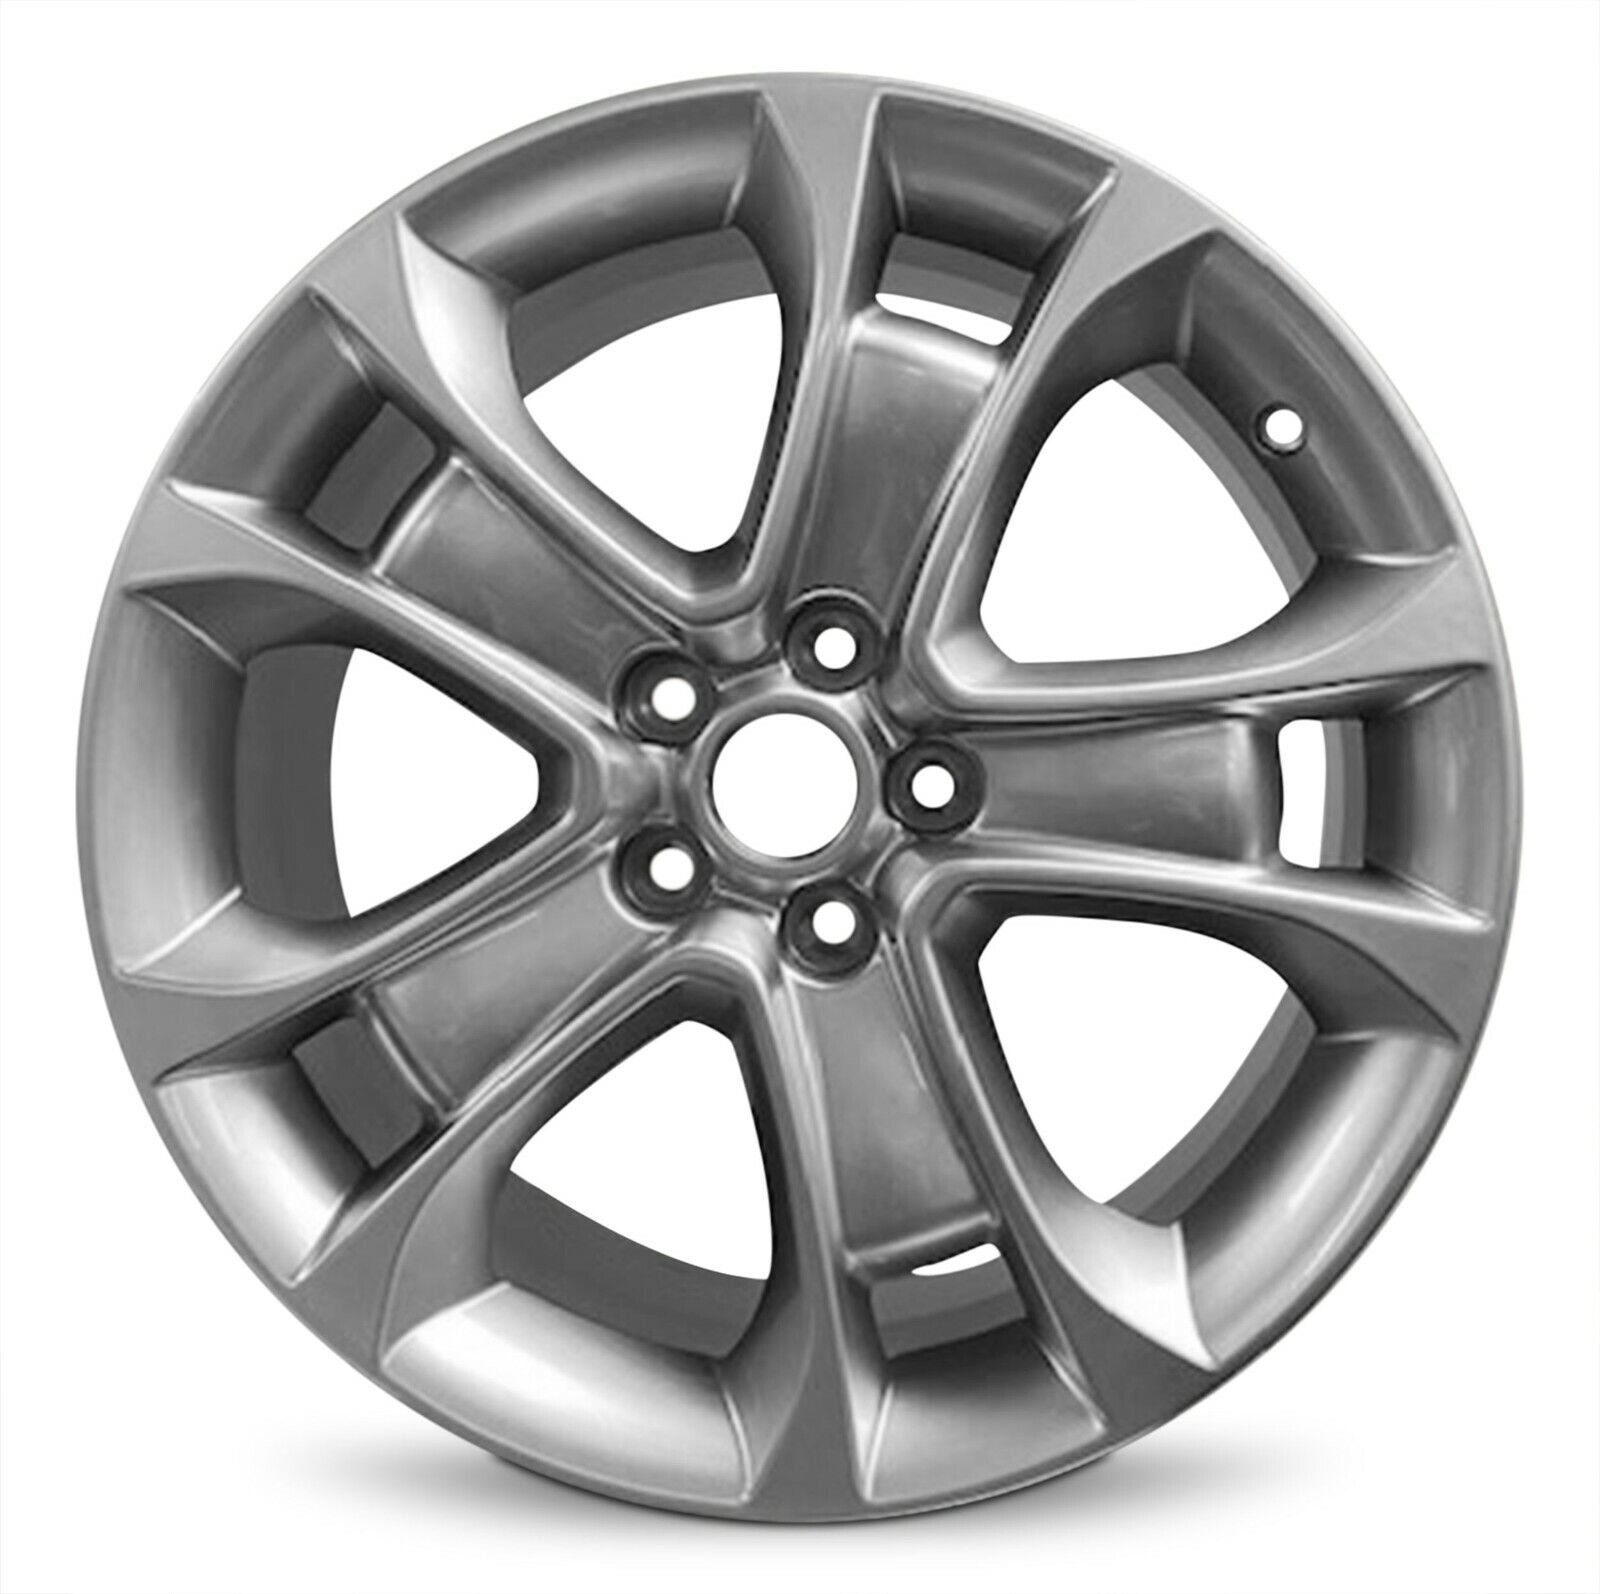 New Wheel For 2009-2016 Volvo S80 18 Inch Silver Alloy Rim